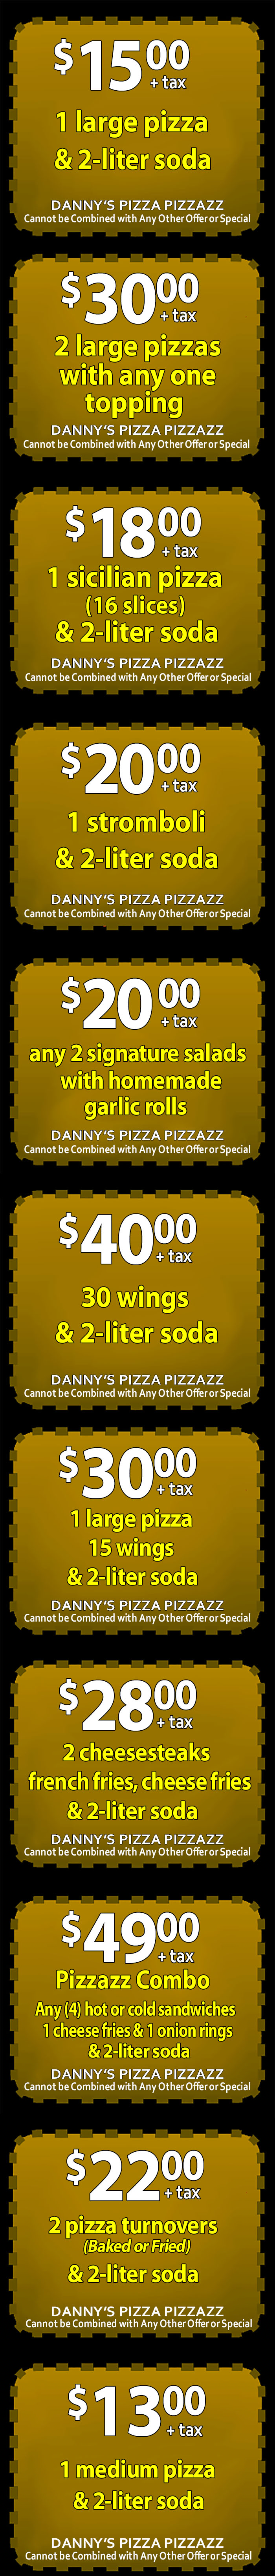 dannys-pizza-pizzazz-mays-landing-nj mobile coupons